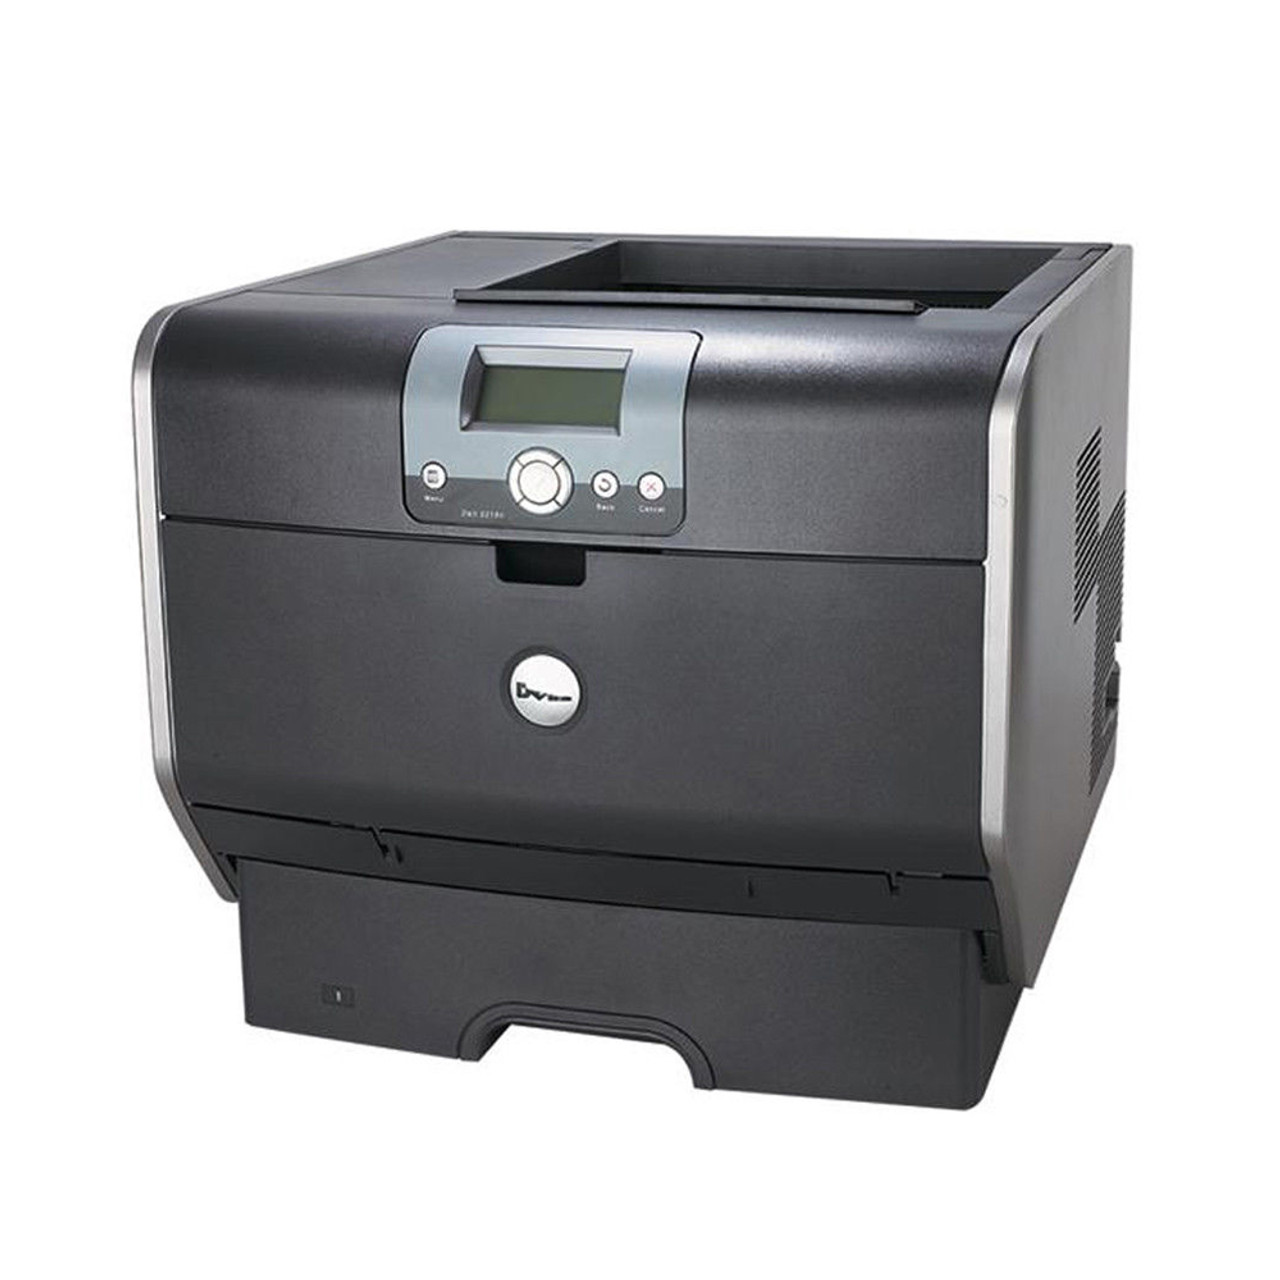 5310n Mono Laser Printer